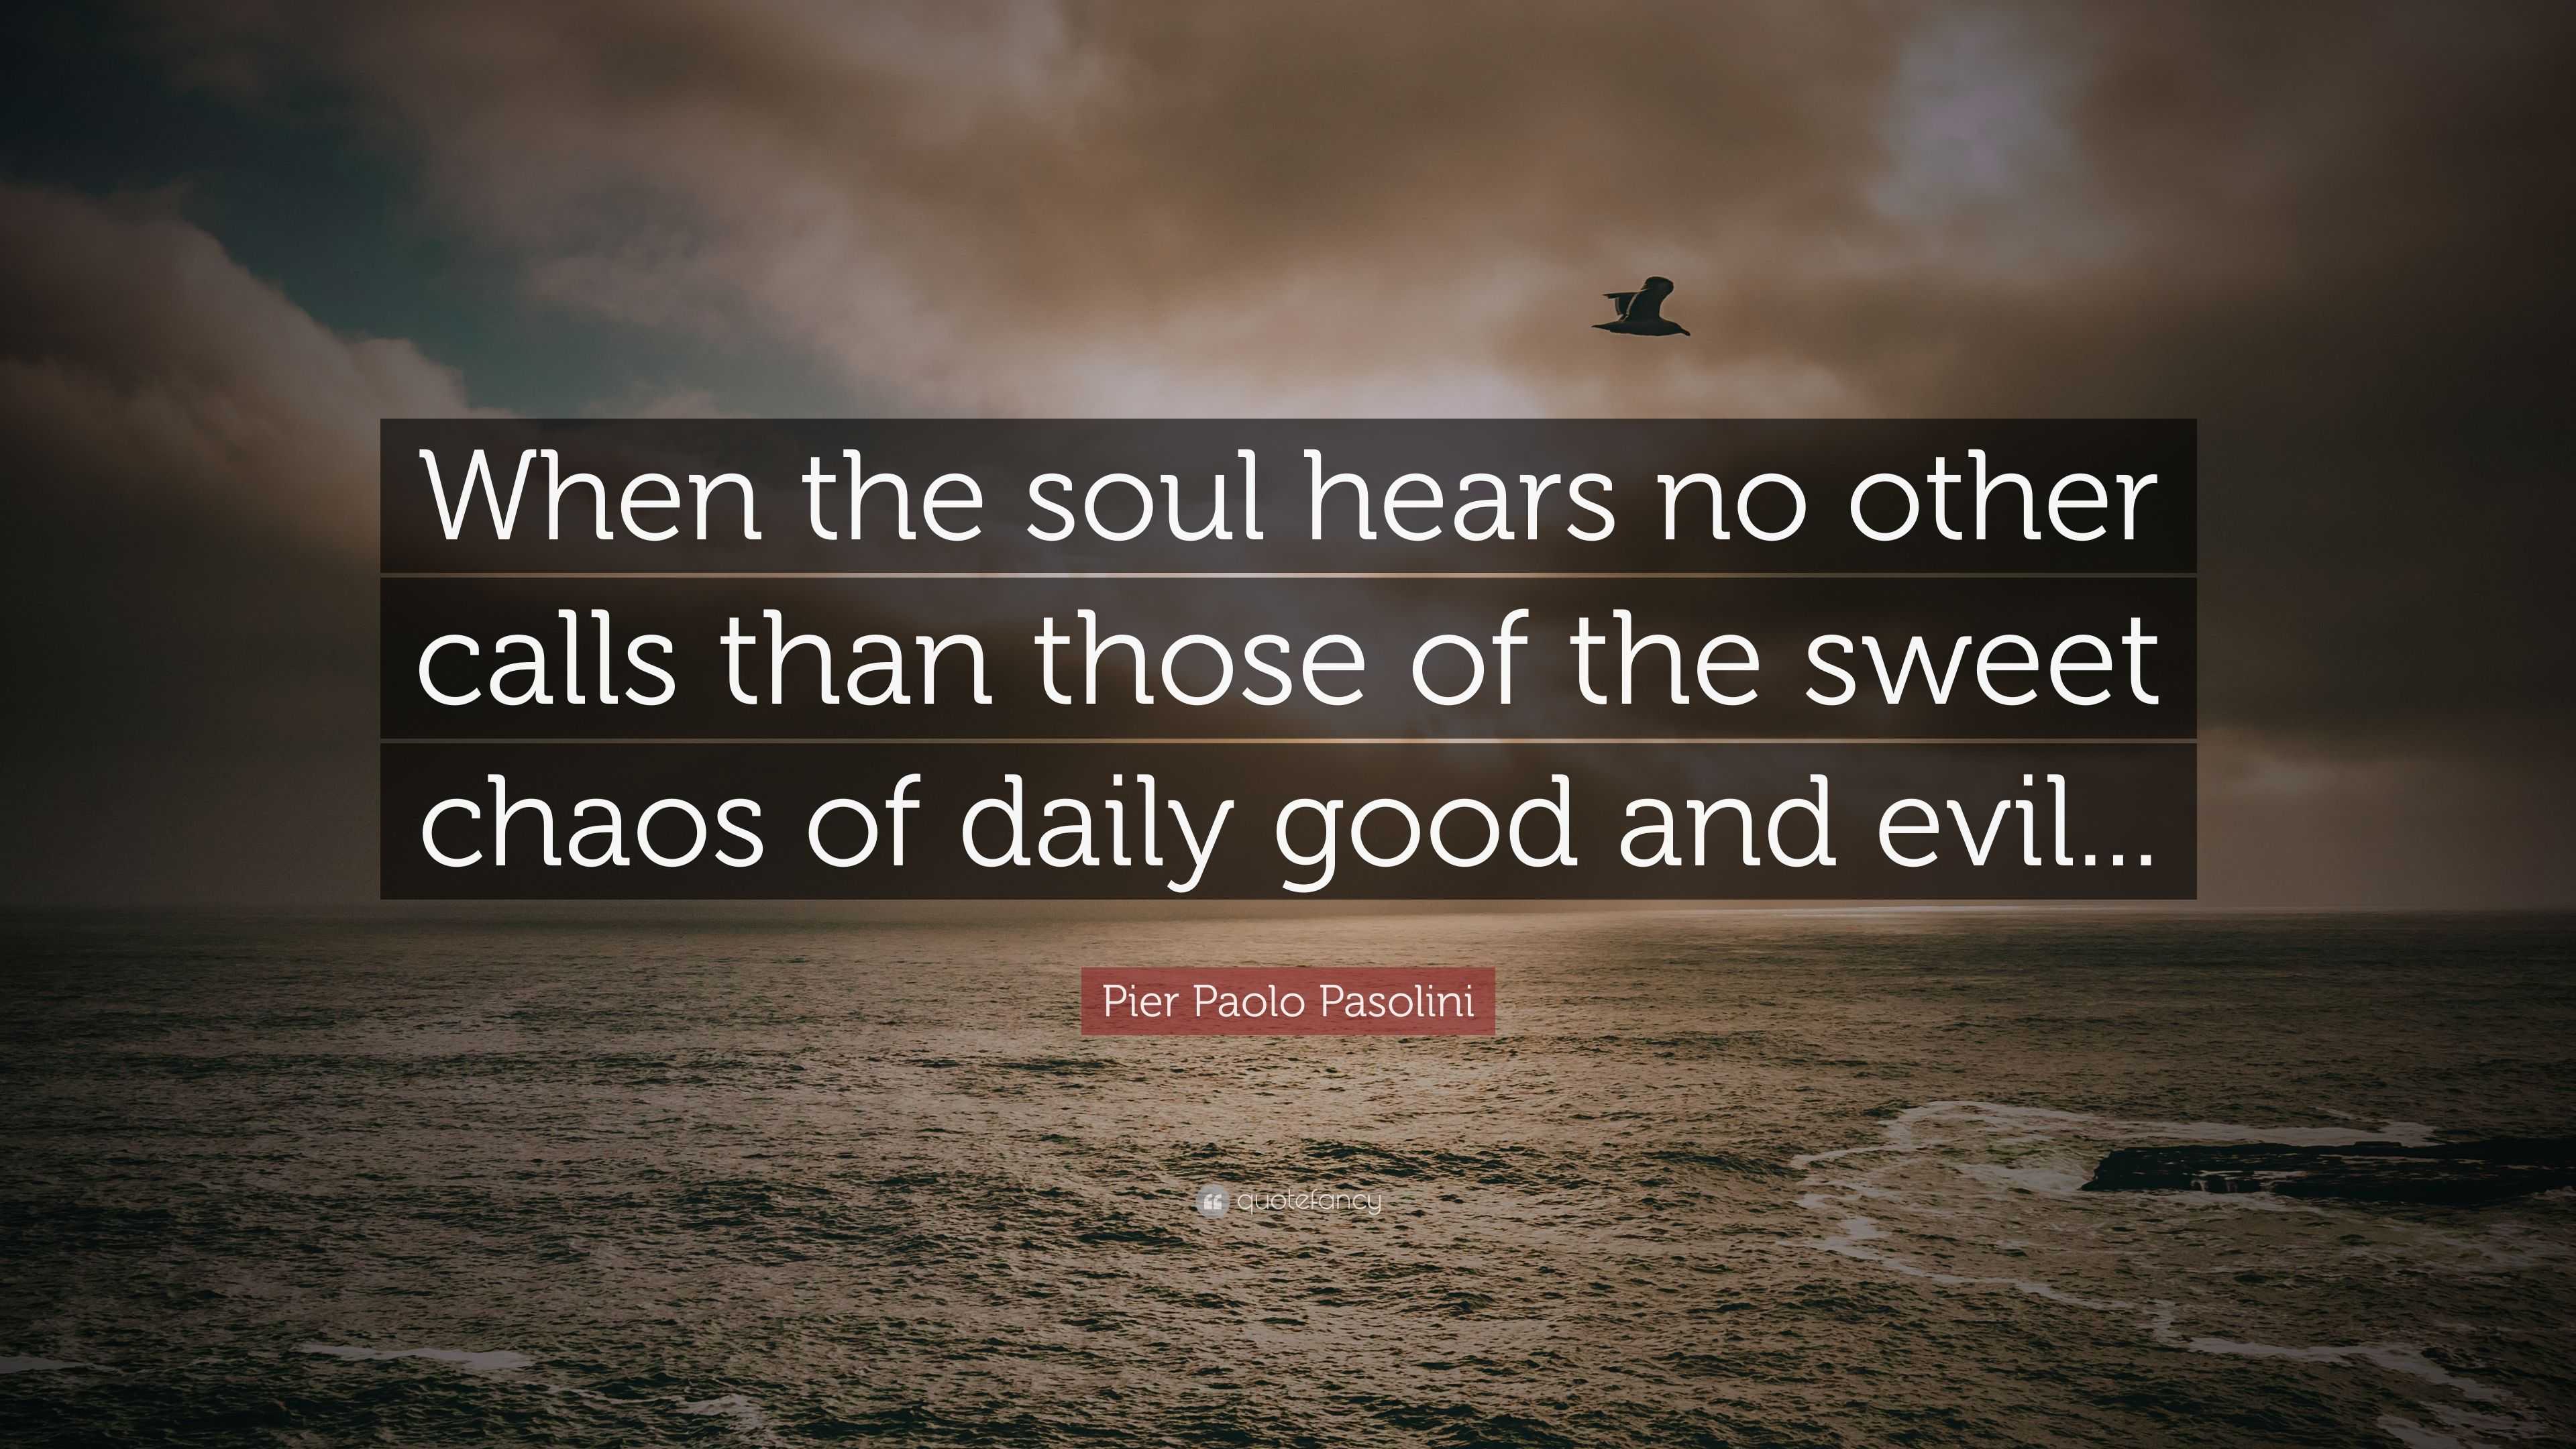 Pier Paolo Pasolini Quote: “When the soul hears no other calls